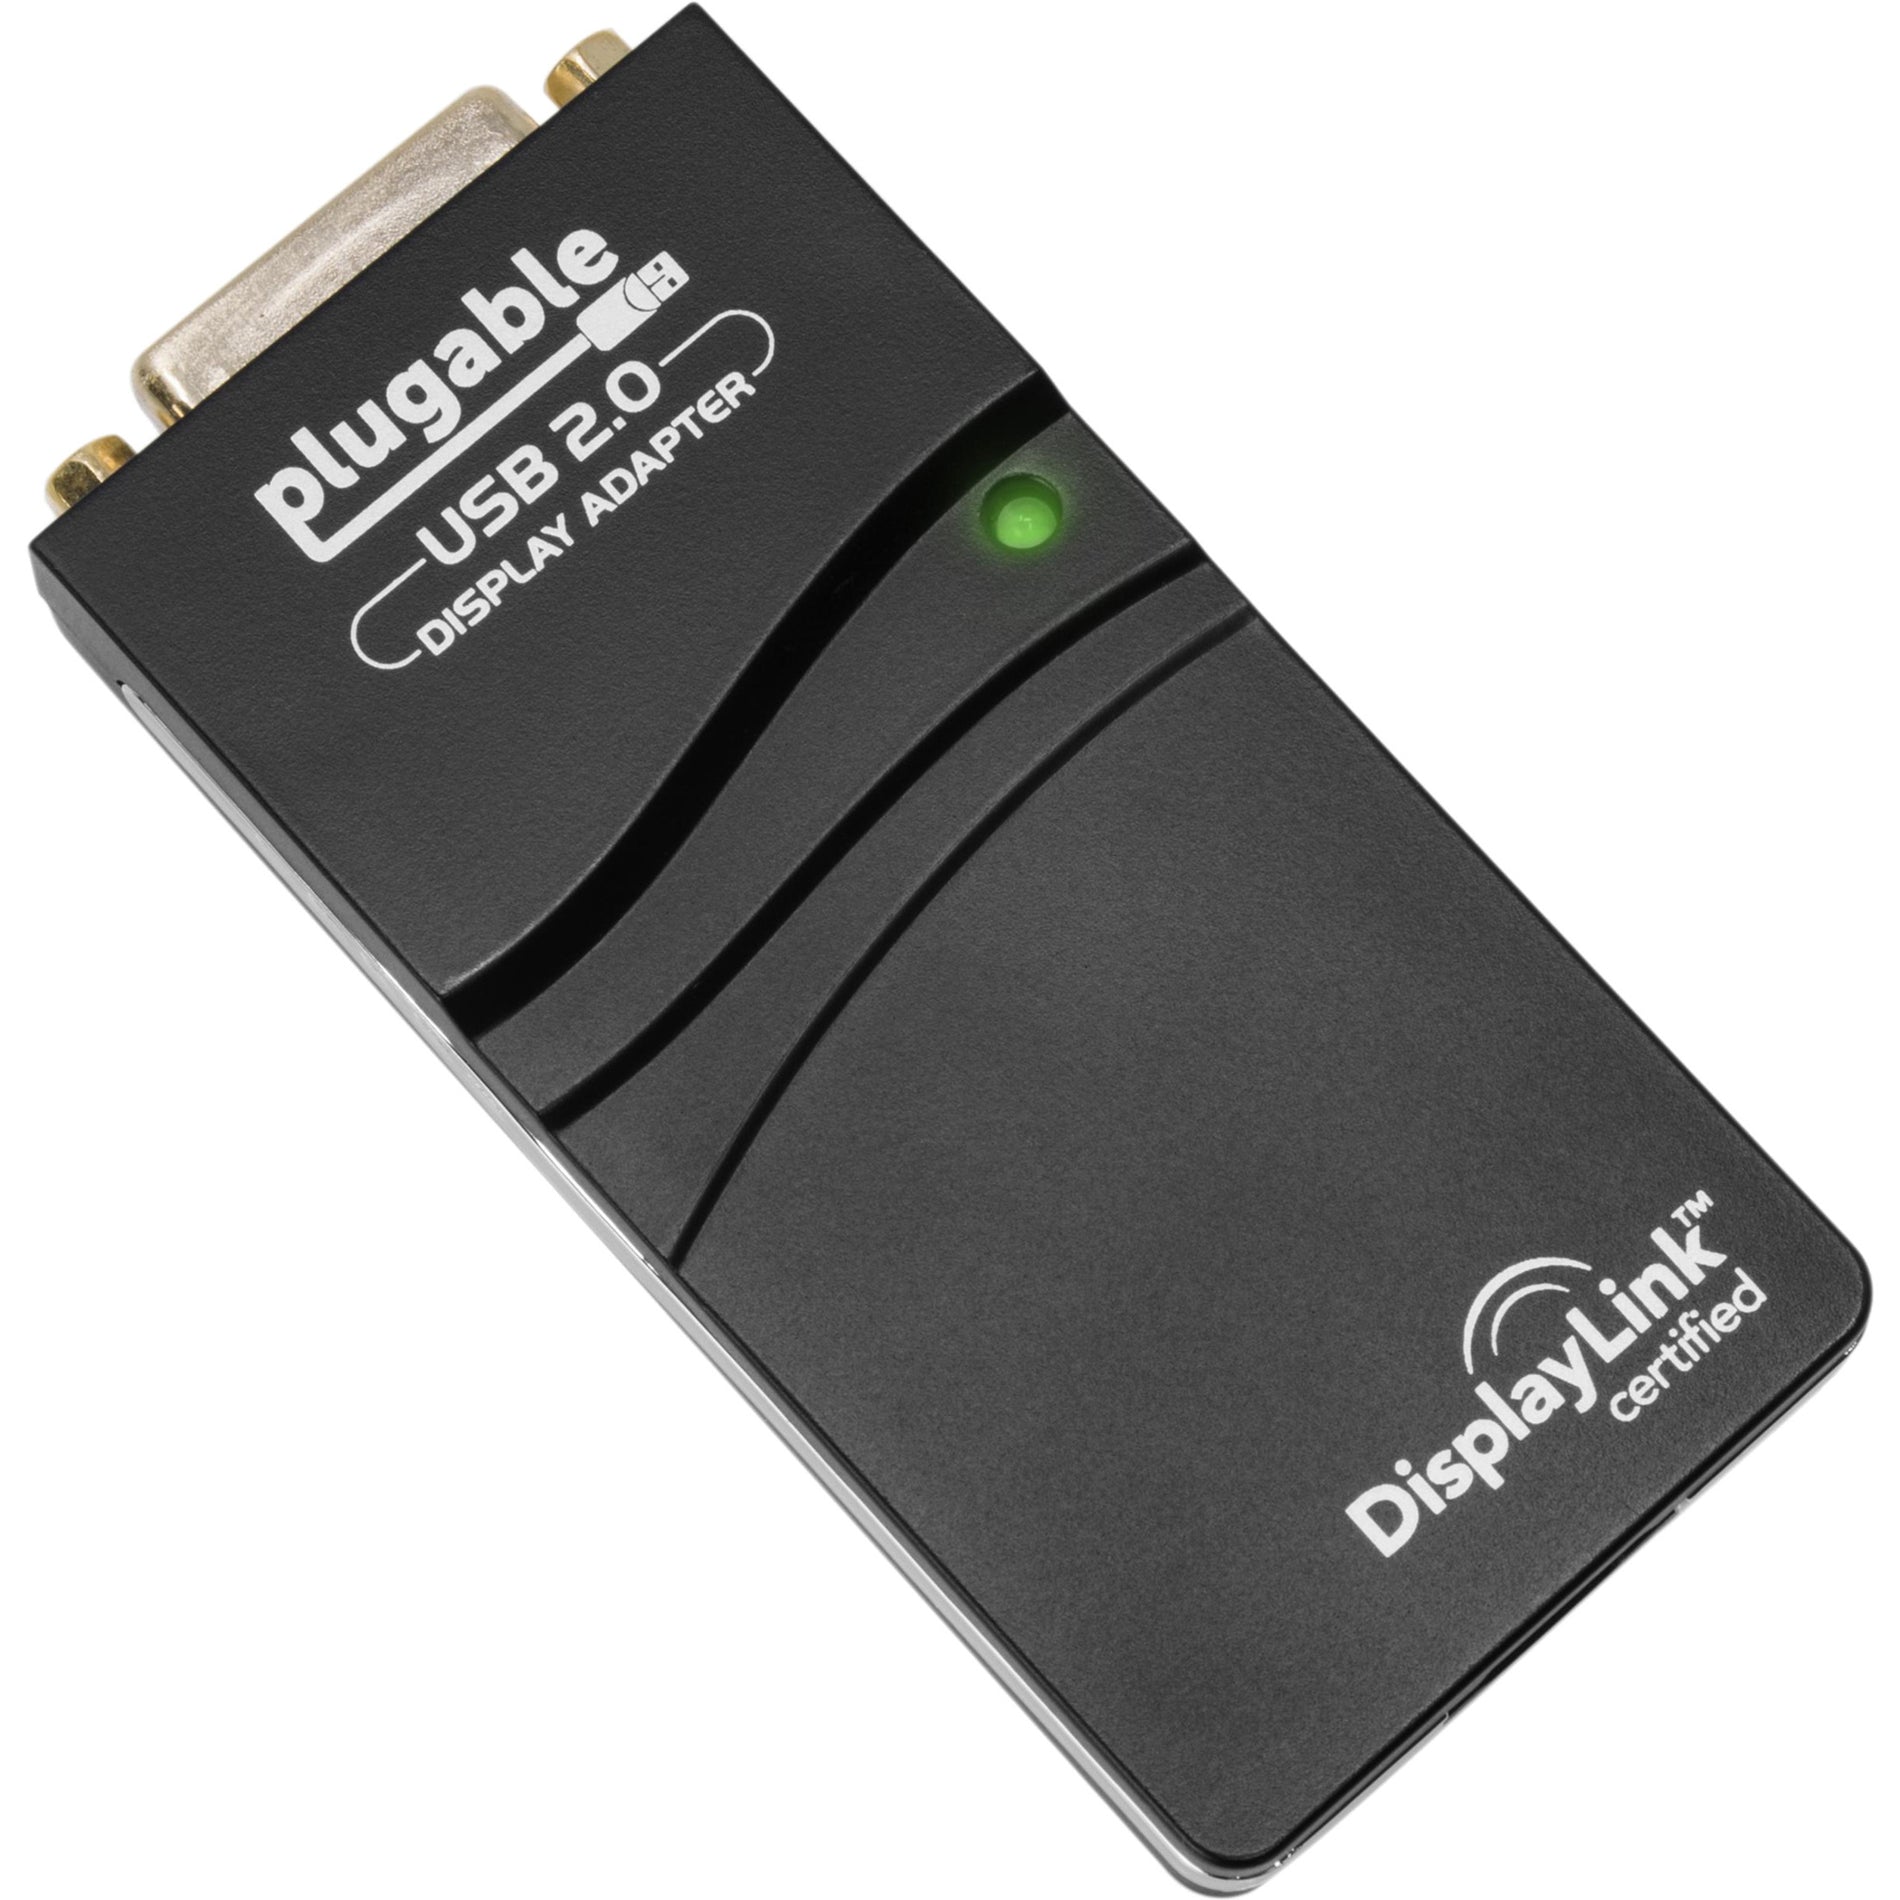 Plugable UGA-165 USB 2.0 zu DVI/VGA/HDMI Video-Grafikadapter für mehrere Monitore Plug-and-Play